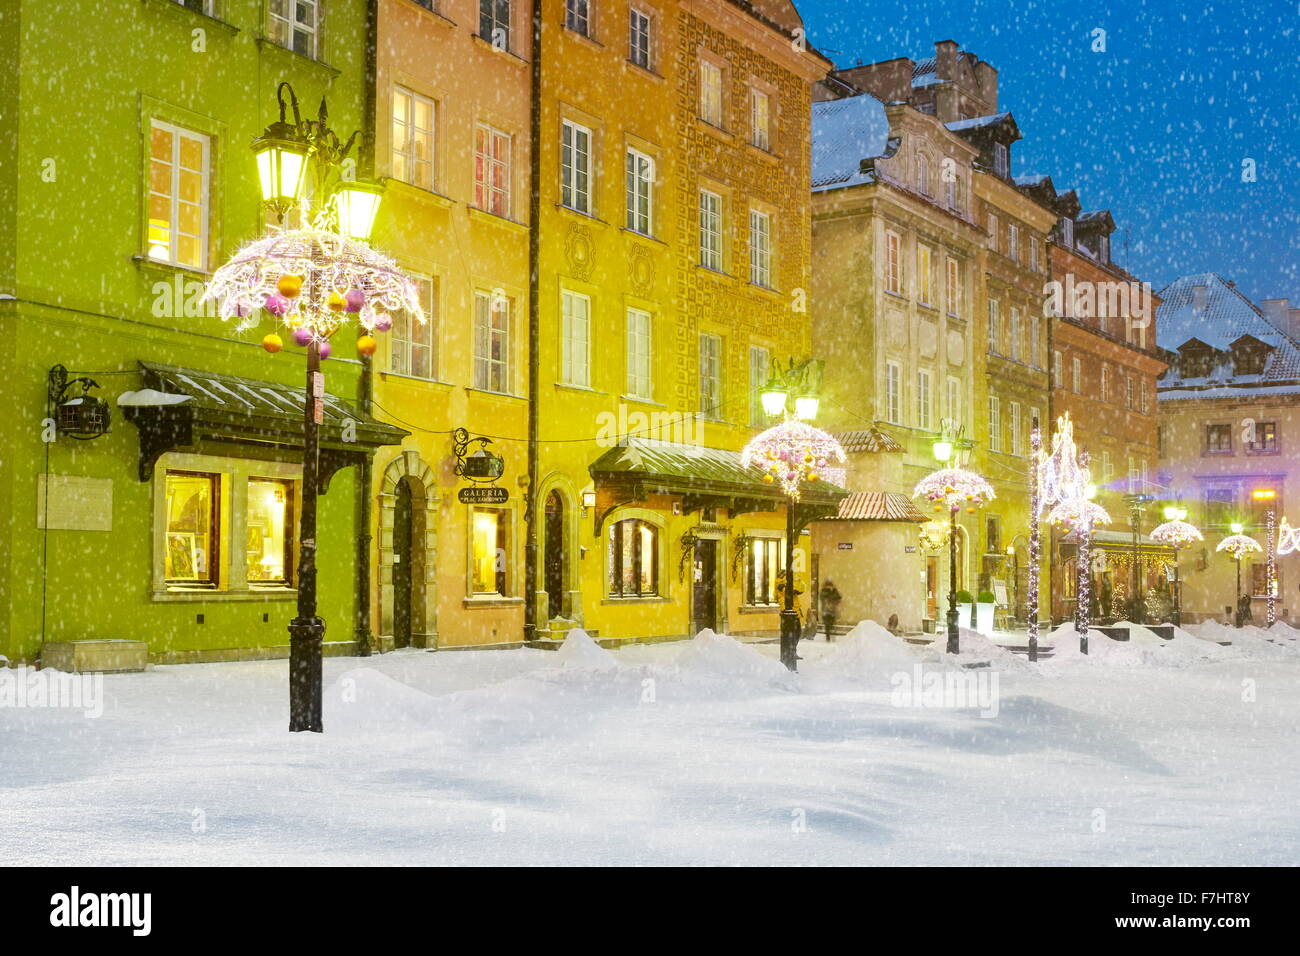 Outdoor hiver neige noël décoration, Varsovie, Pologne Banque D'Images